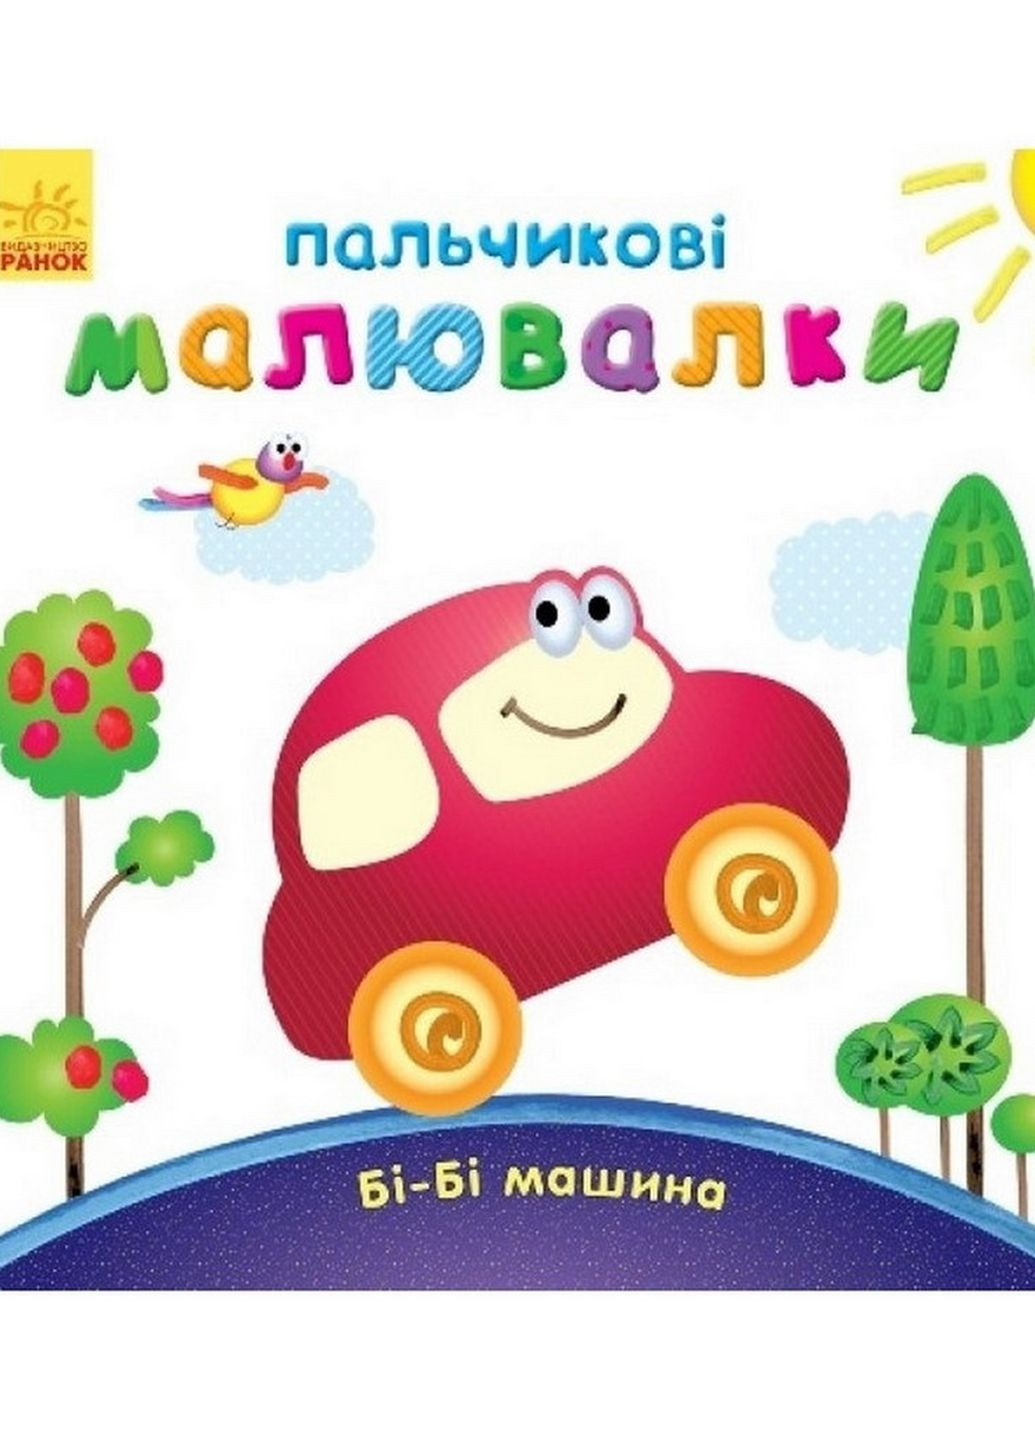 Пальчиковые рисовалки: Би-би машина Ранок 509024 на украинском языке Ranok Creative (261485915)